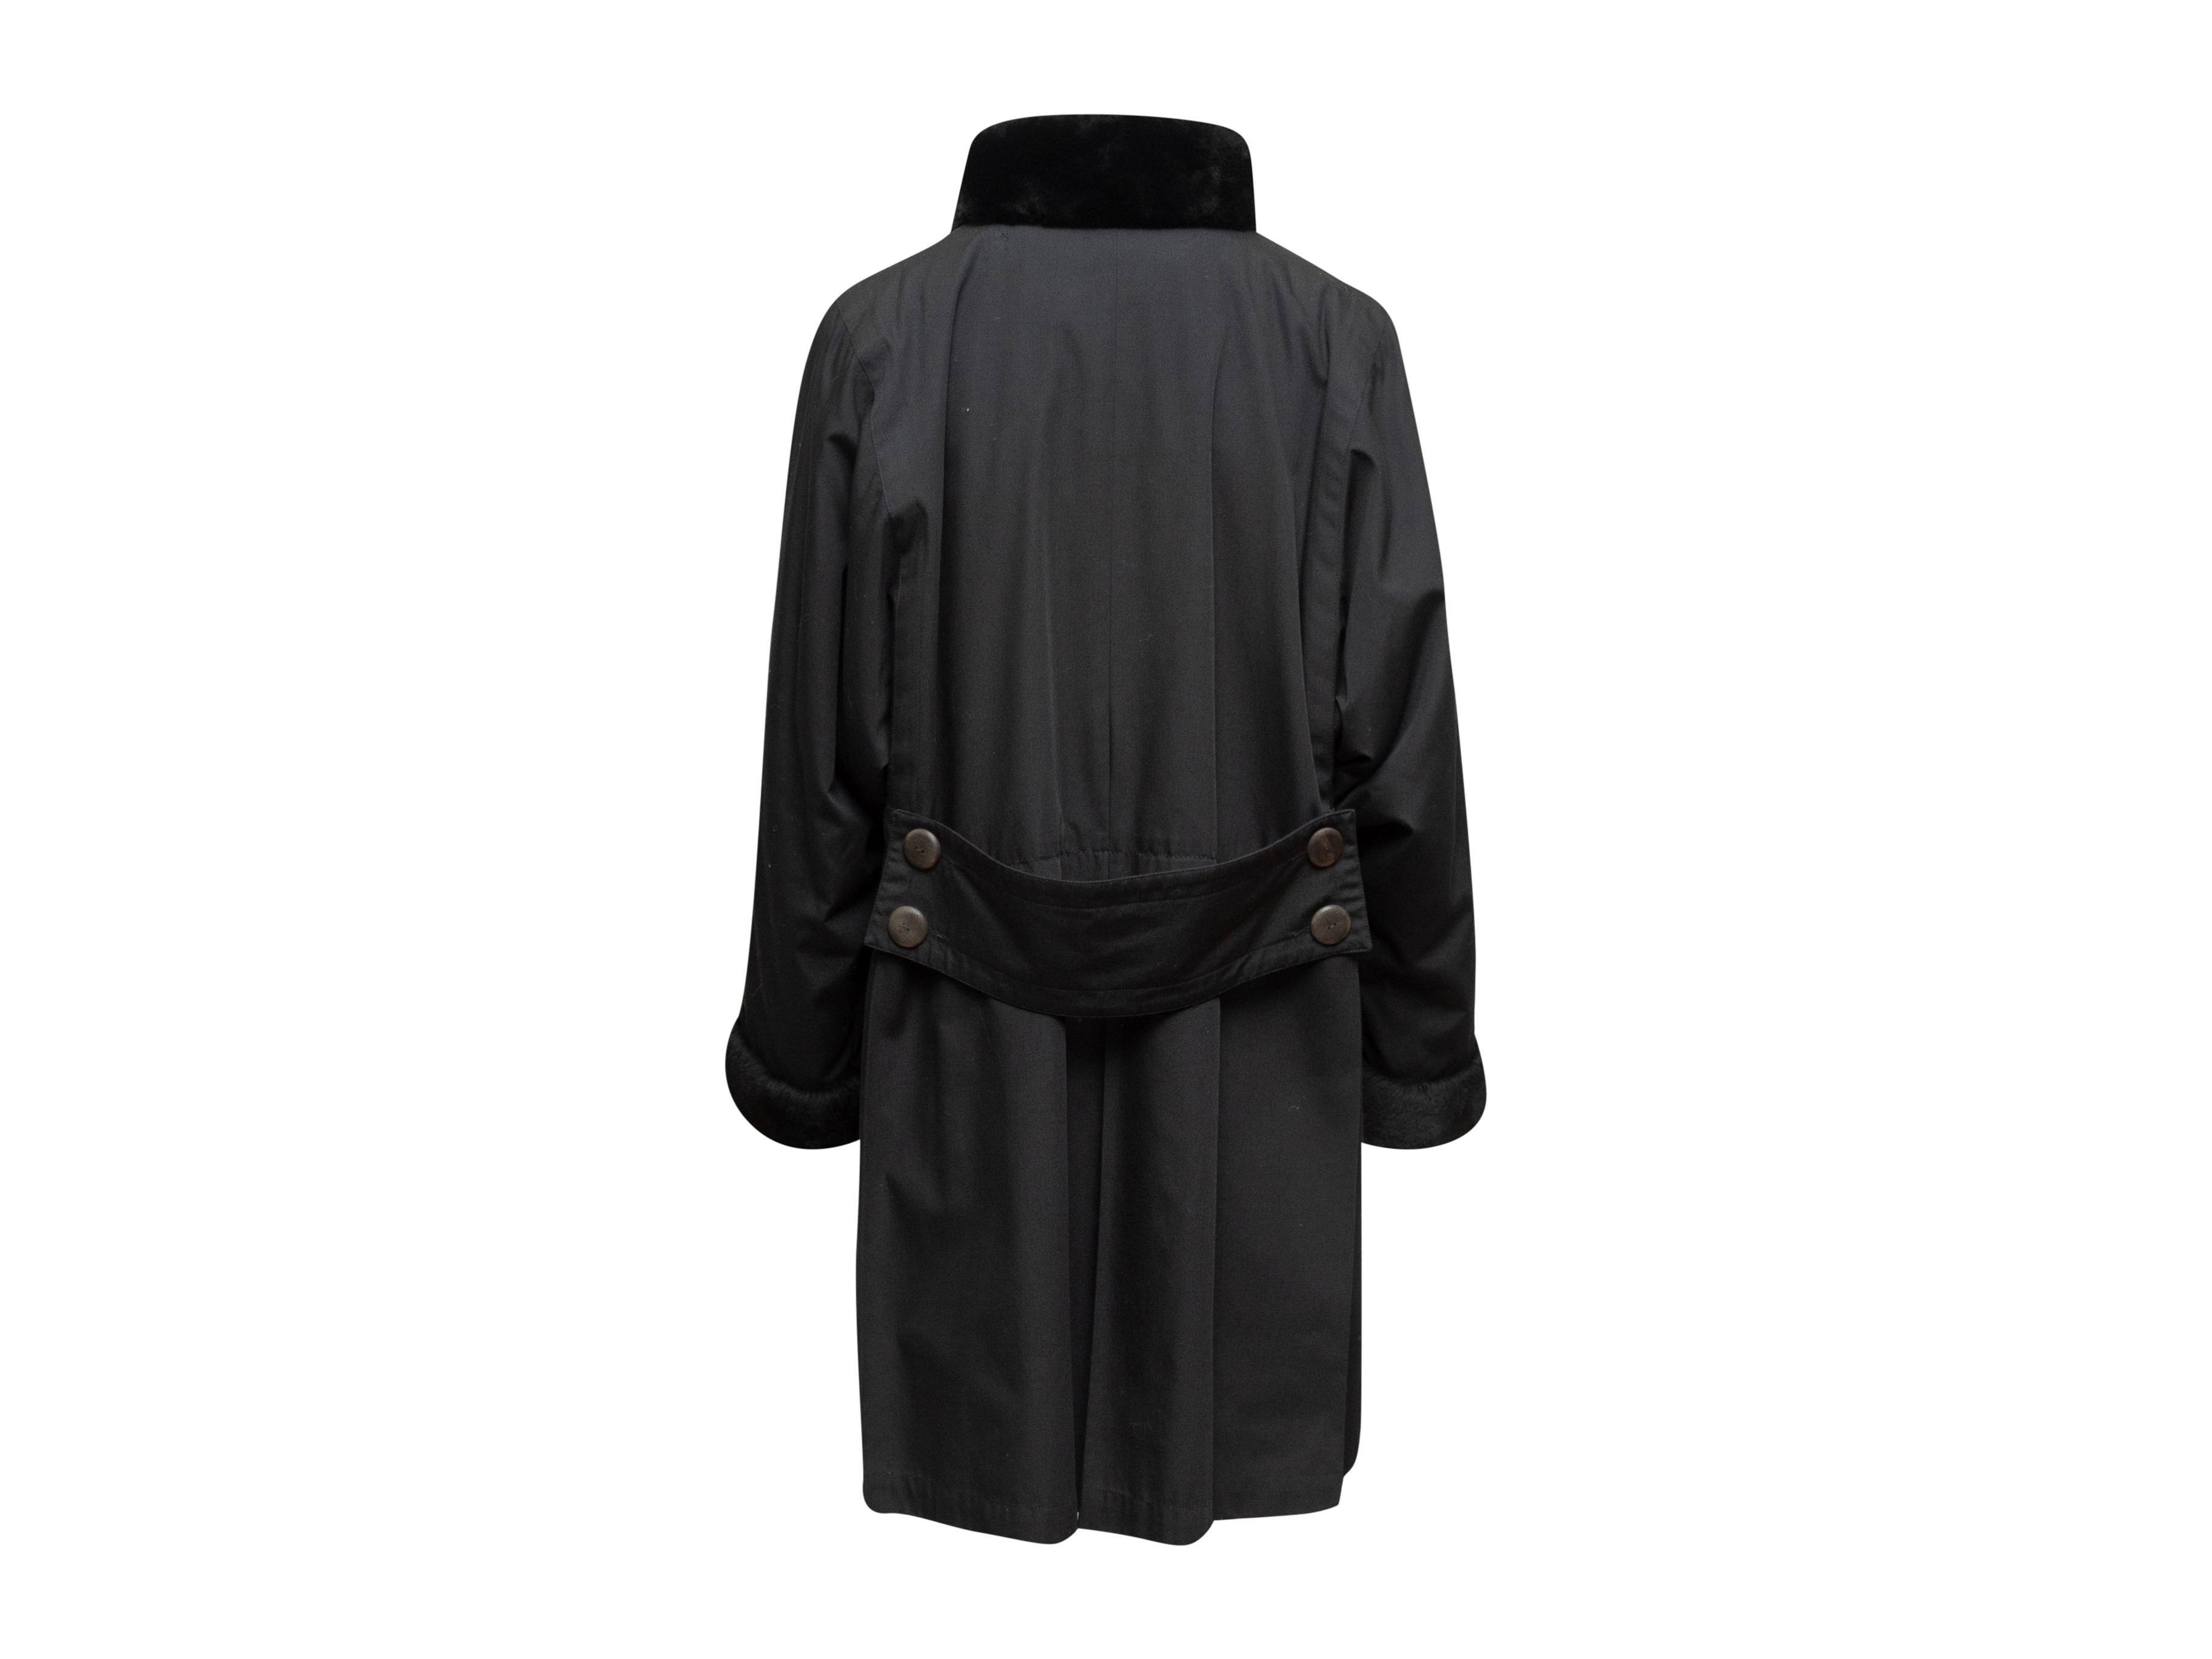 Yves Saint Laurent Black Fur-Trimmed Coat 3